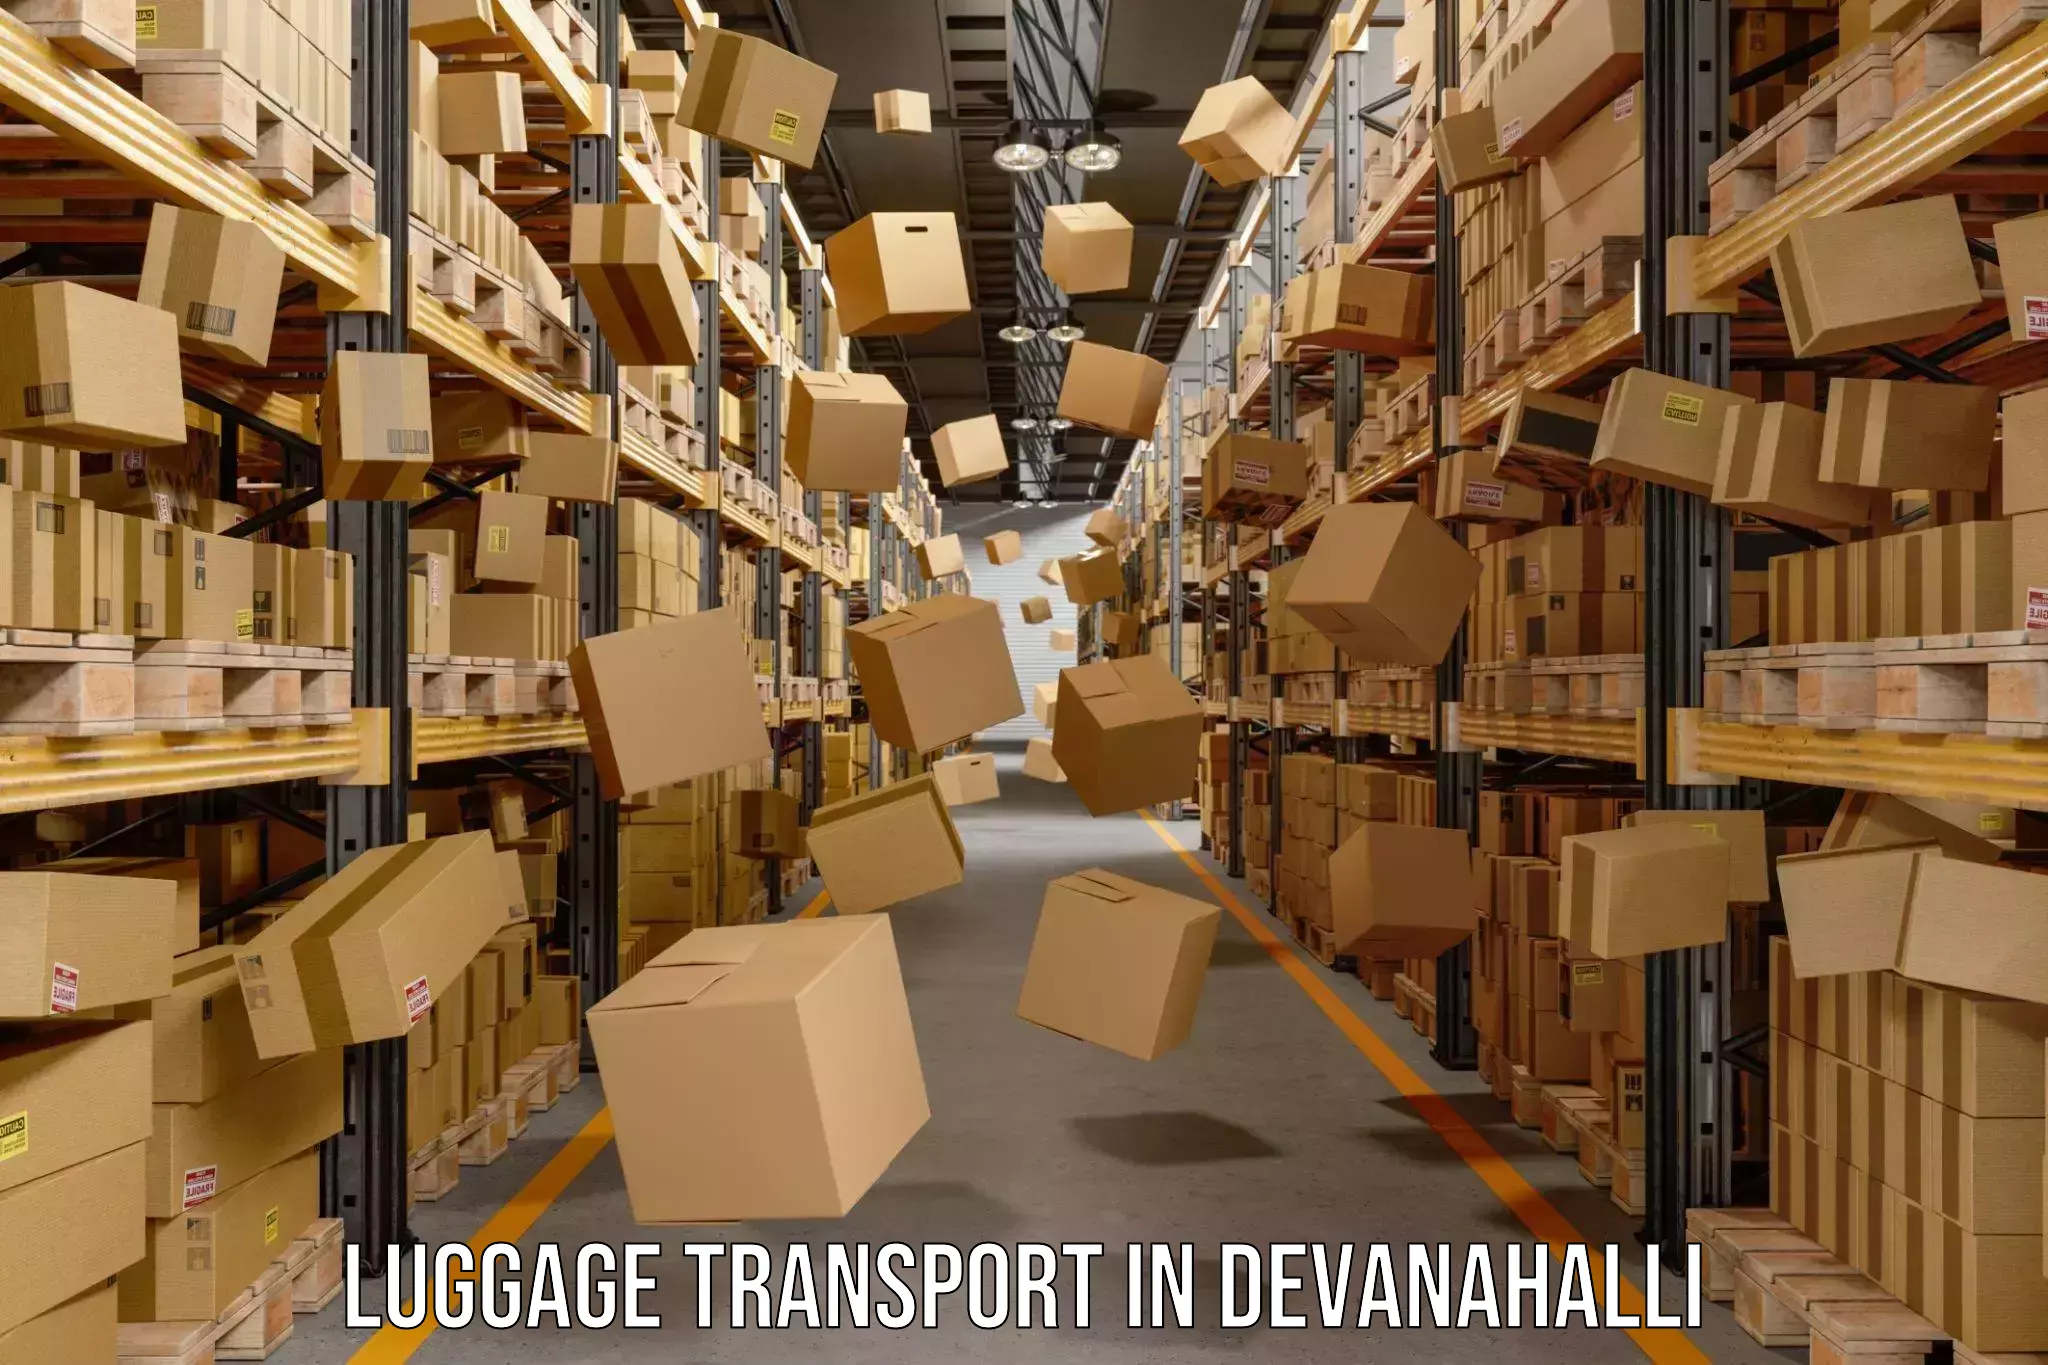 Regional luggage transport in Devanahalli